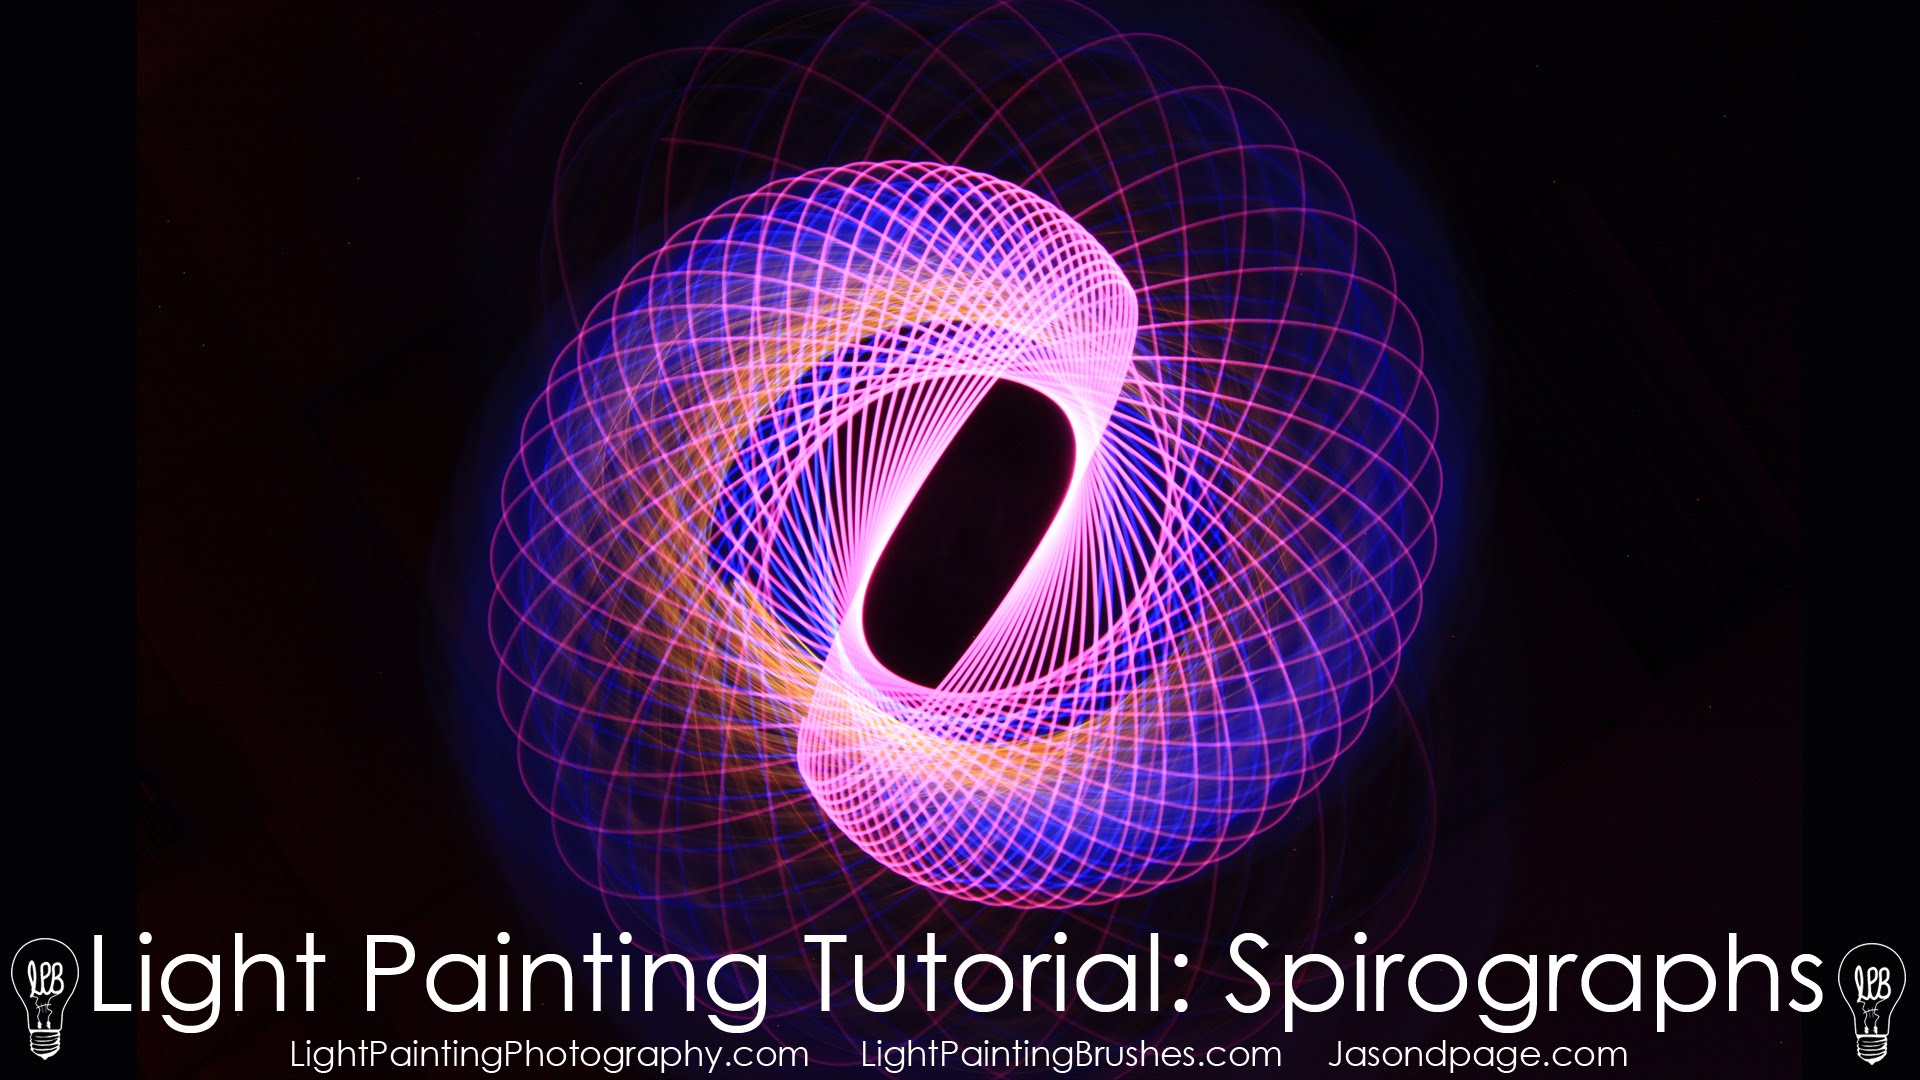 Light Painting Tutorial, Spirographs - YouTube